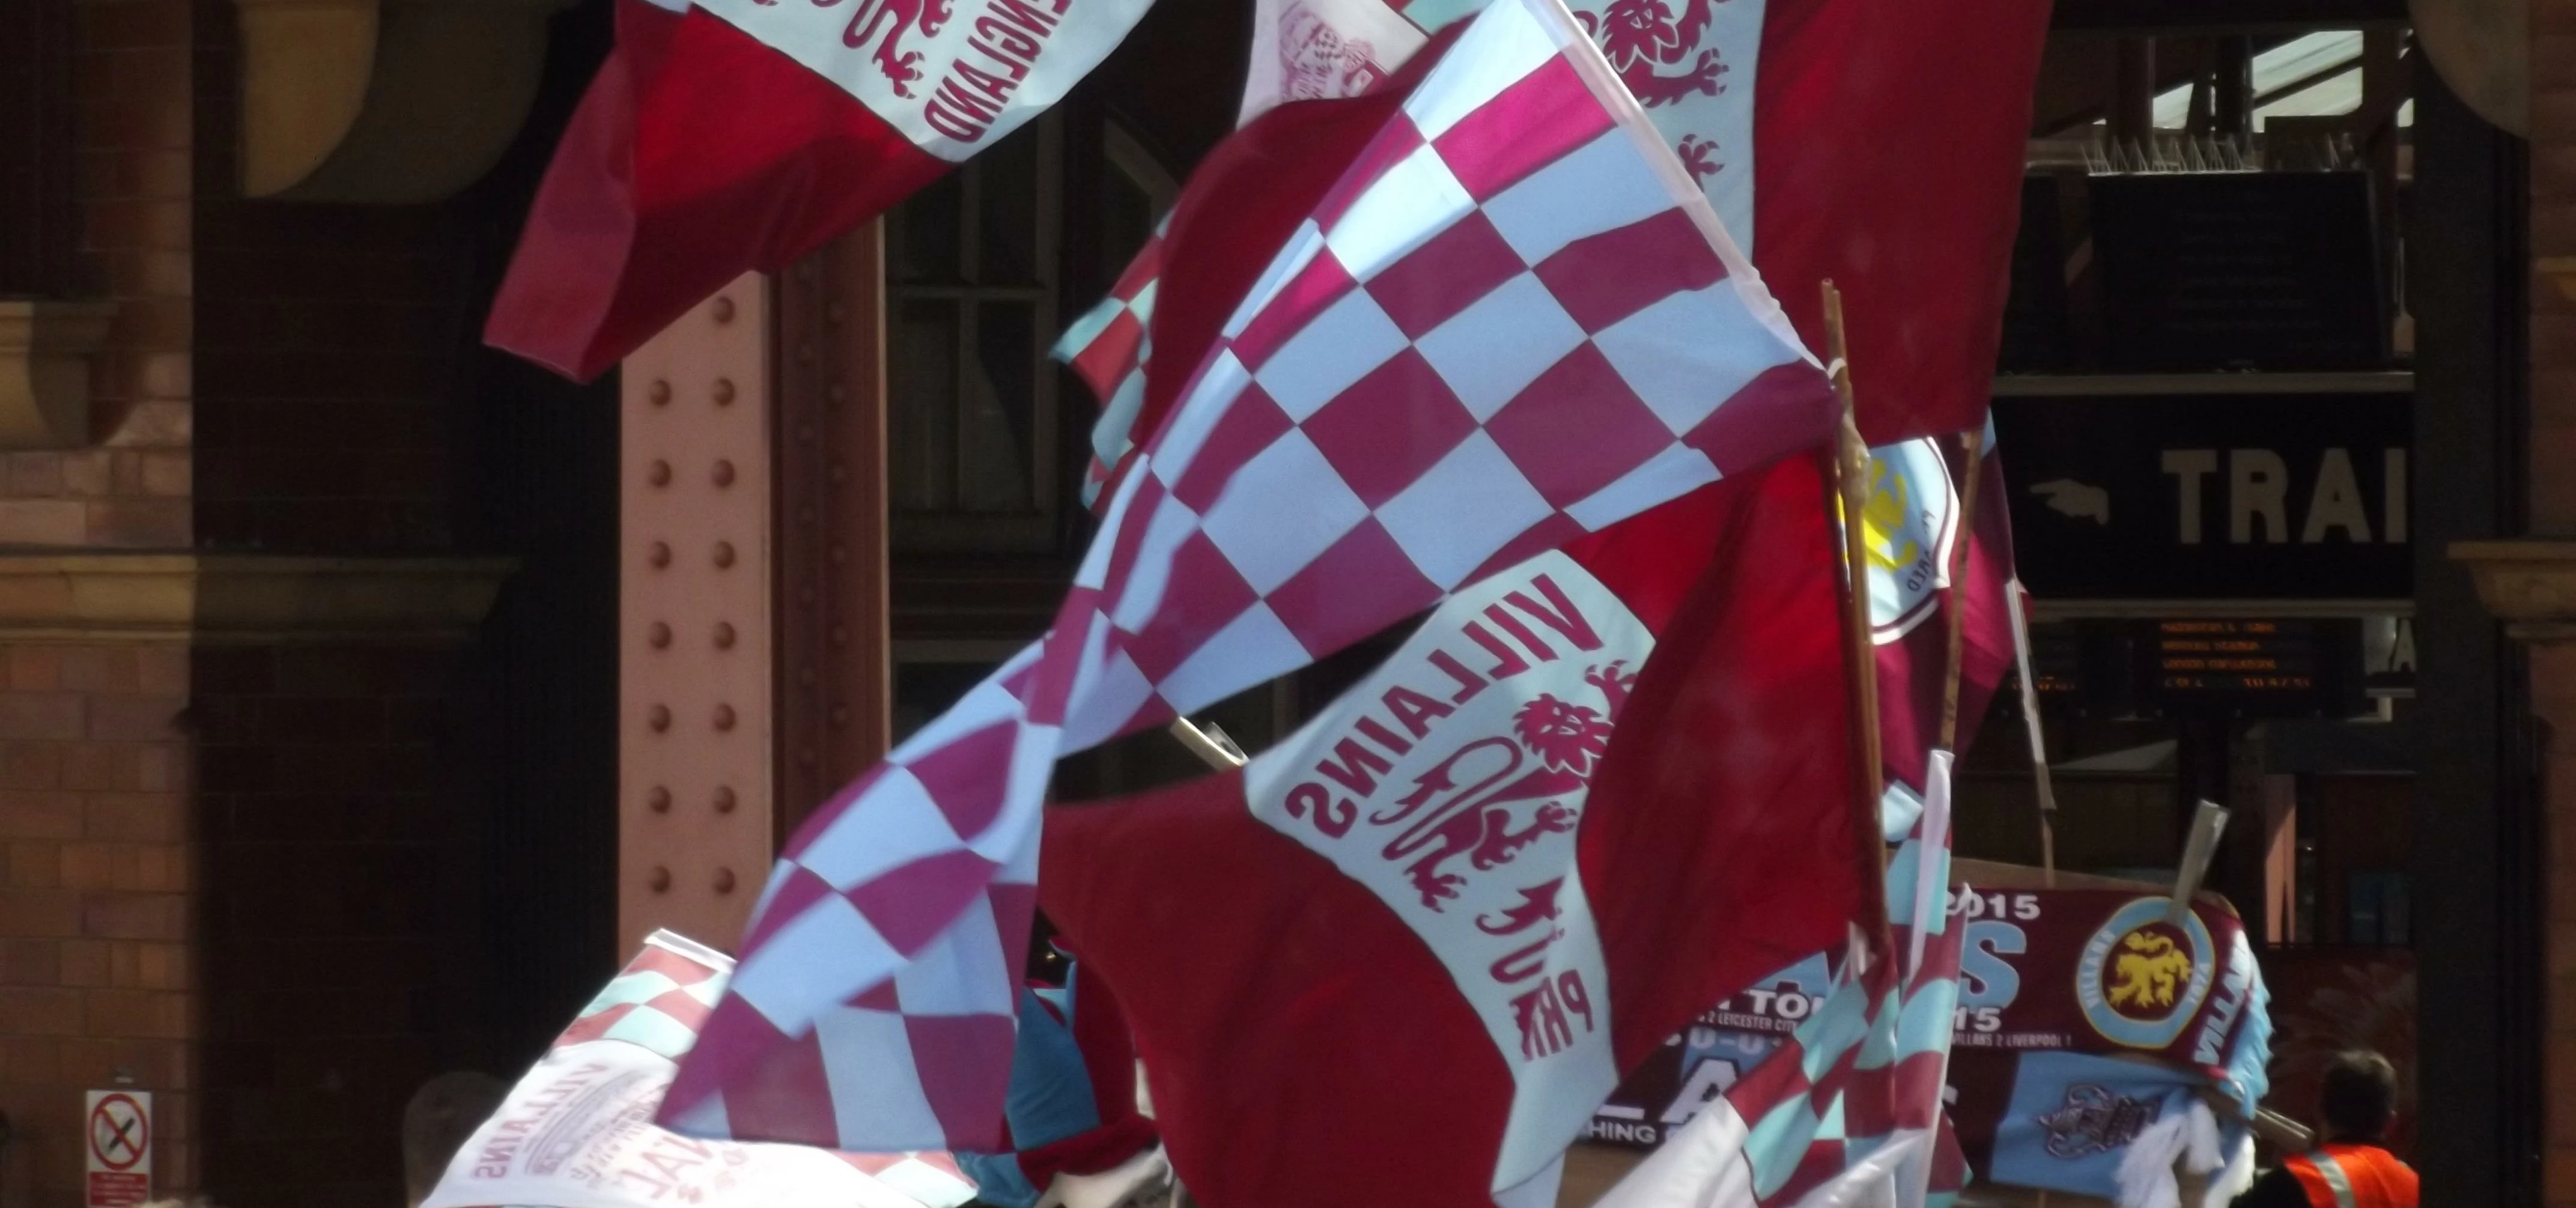 Aston Villa - FA Cup Final 2015 day - flags outside Birmingham Moor Street Station